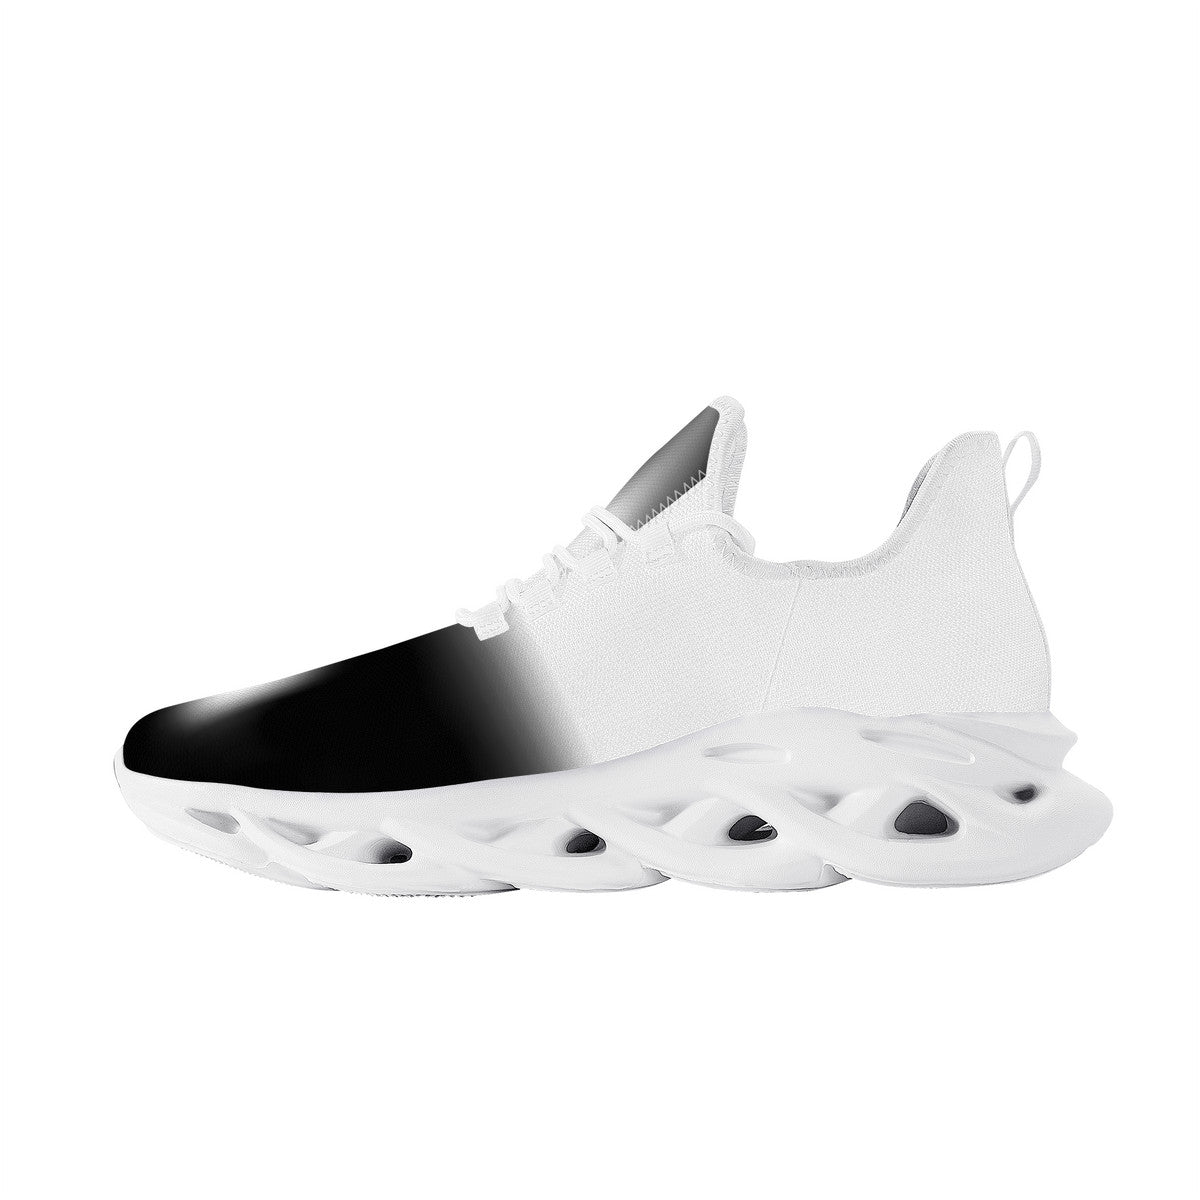 White Advisory | Custom Cool Shoes | Shoe Zero